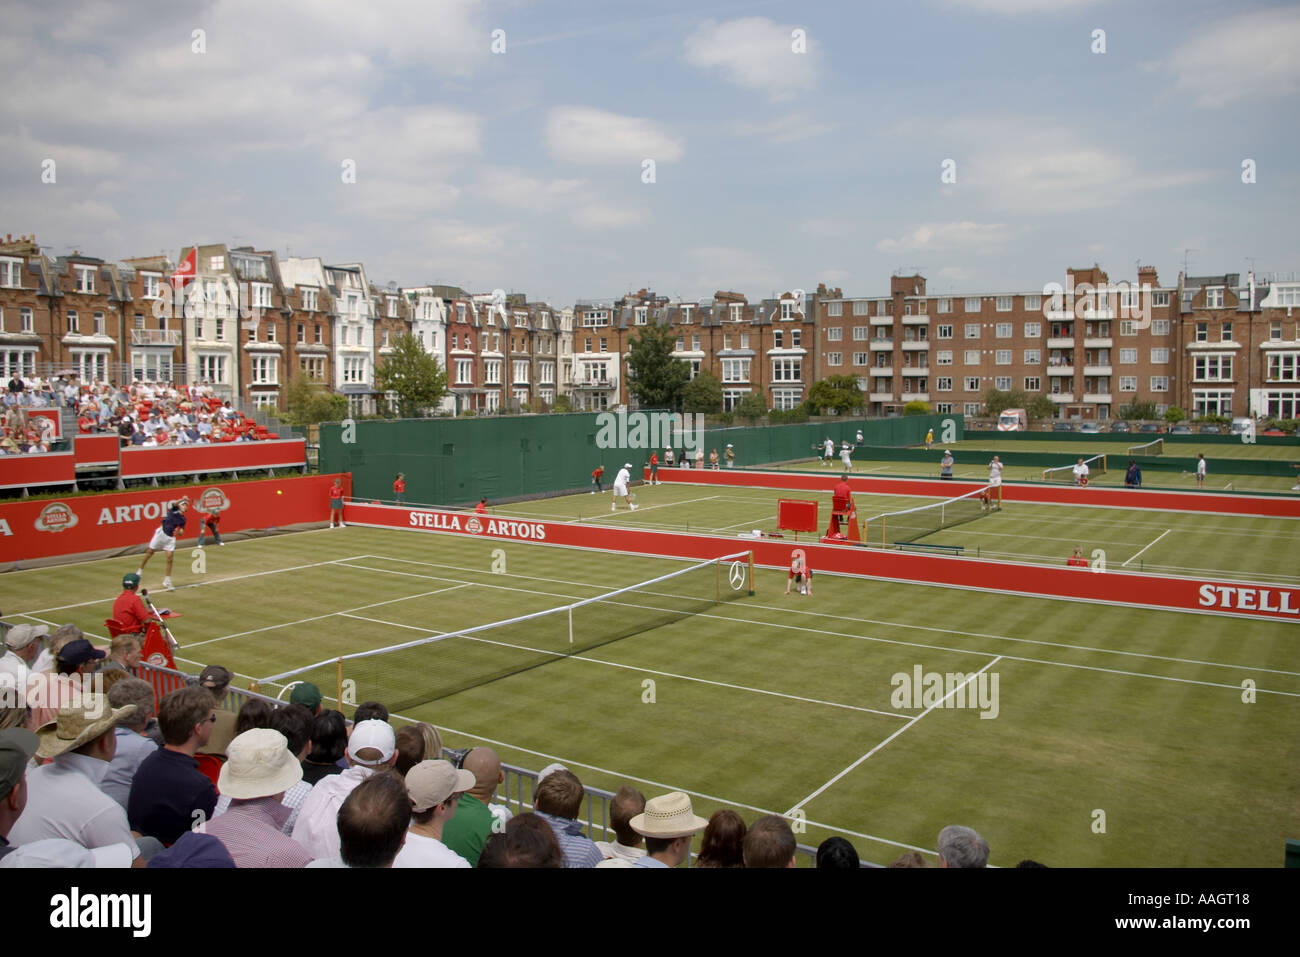 Stella Artois tournoi de tennis club Queens tribunaux et motifs Photo Stock  - Alamy